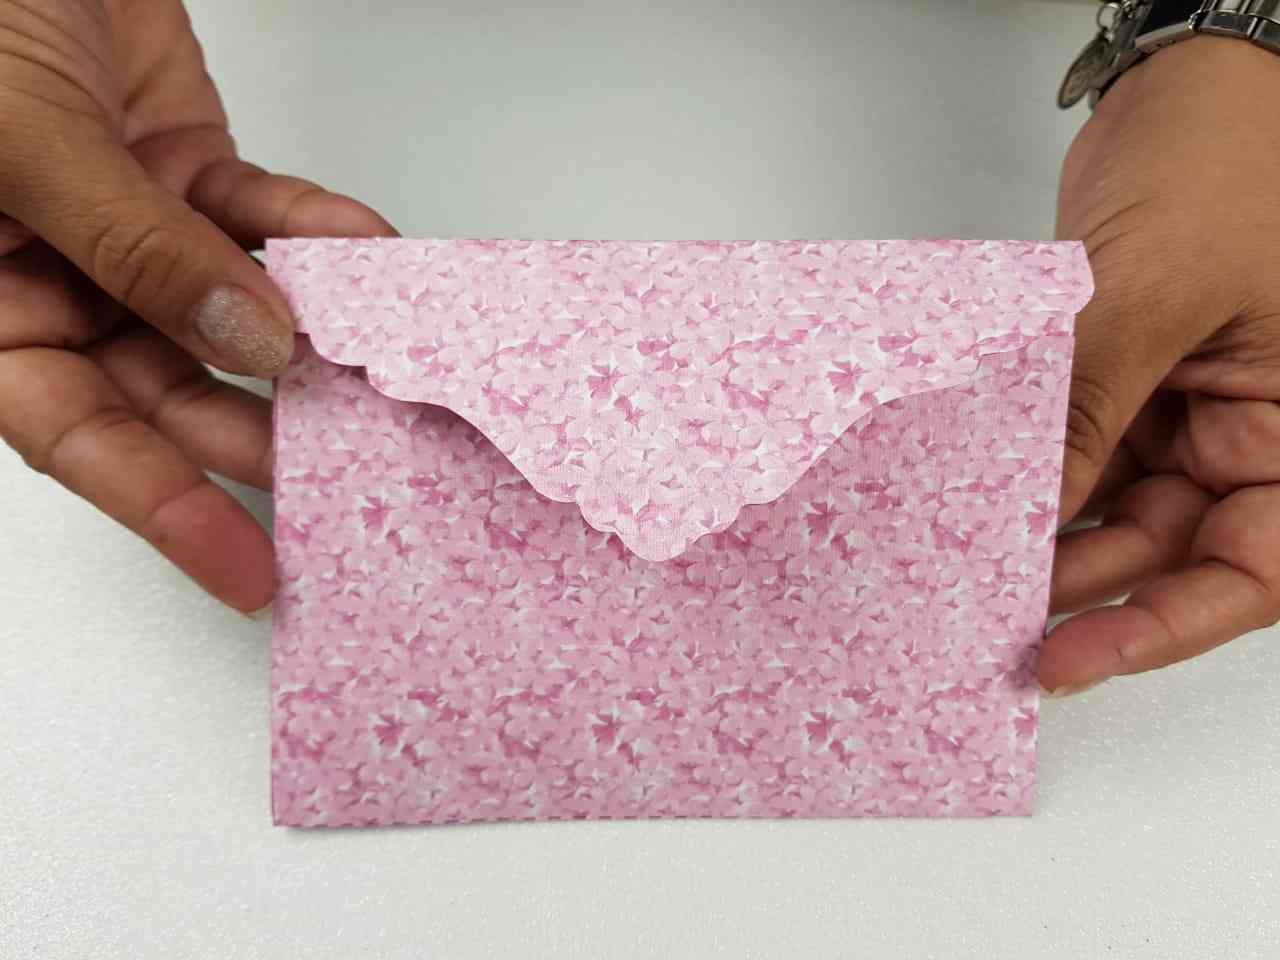 Molde de envelope para imprimir: Modelos - Artesanato 